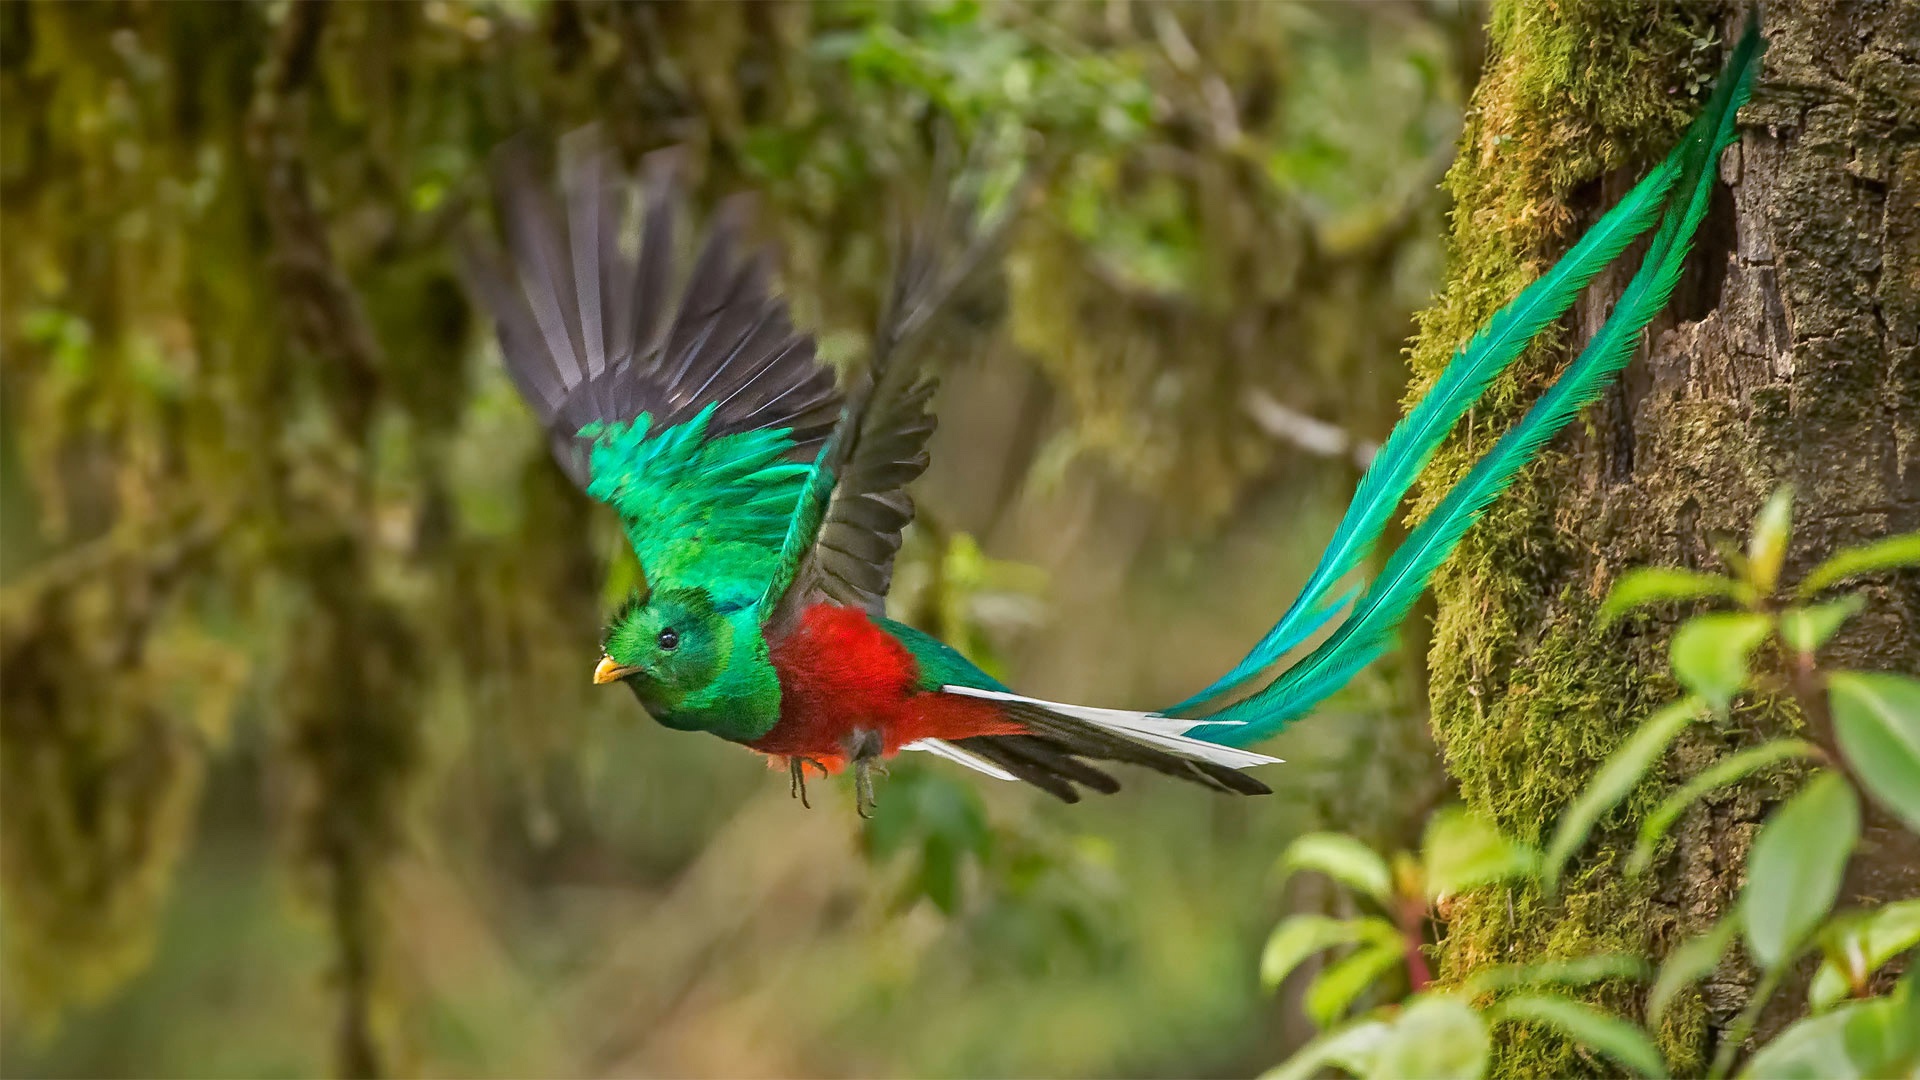 432019 descargar imagen quetzal, animales, ave, aves: fondos de pantalla y protectores de pantalla gratis